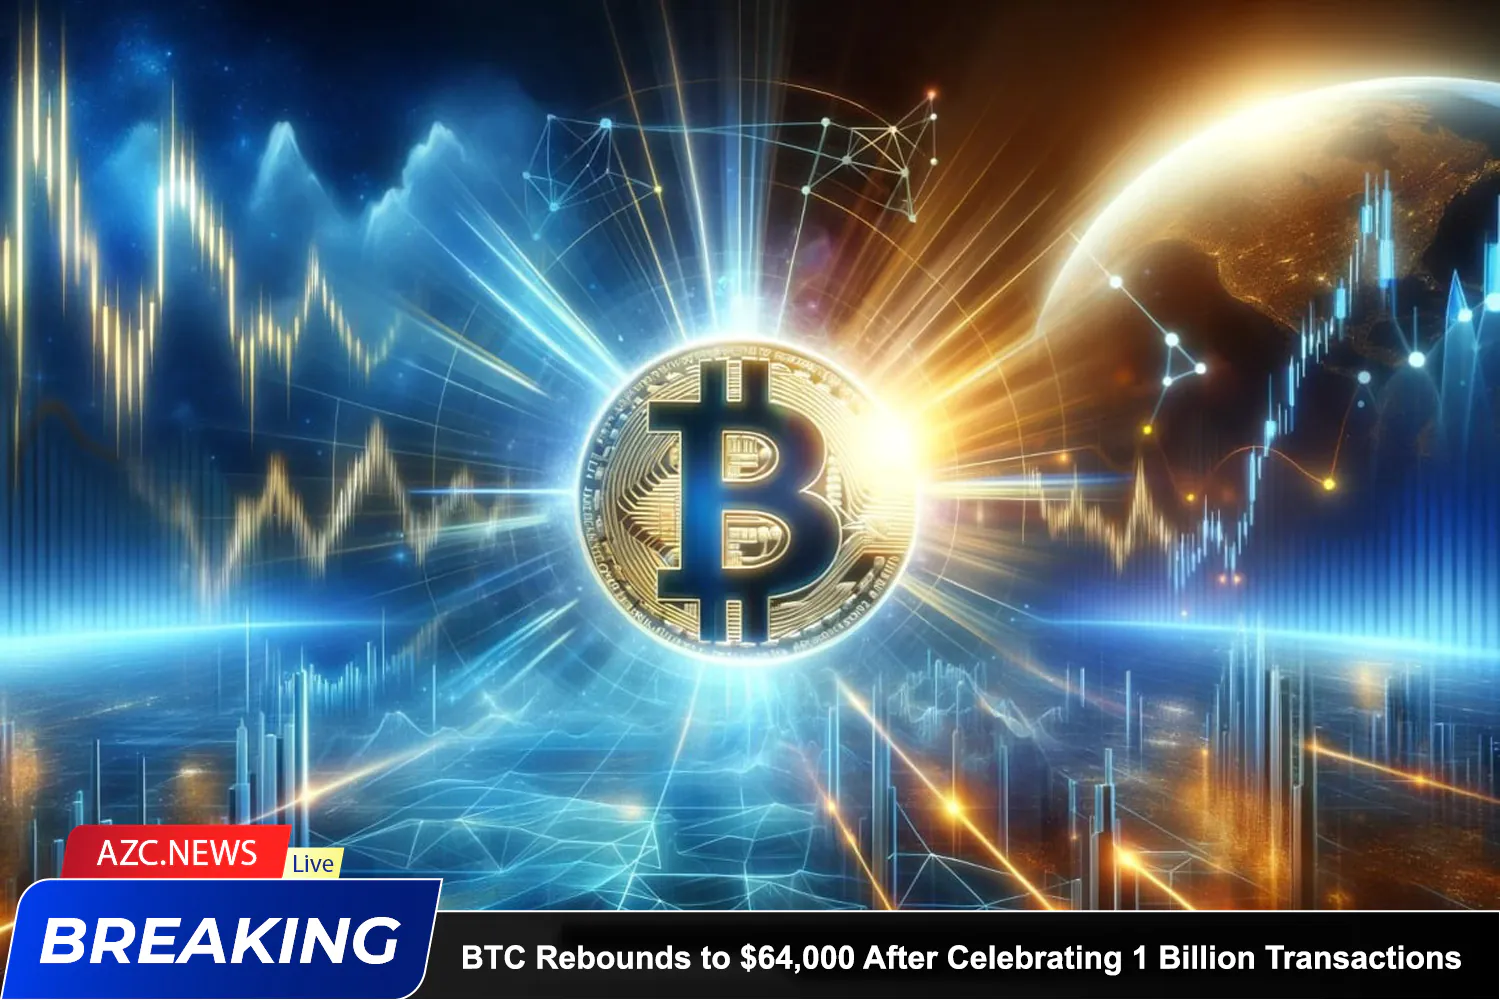 Azcnews Bitcoin Rebounds To $64,000 After Celebrating 1 Billion Transactions